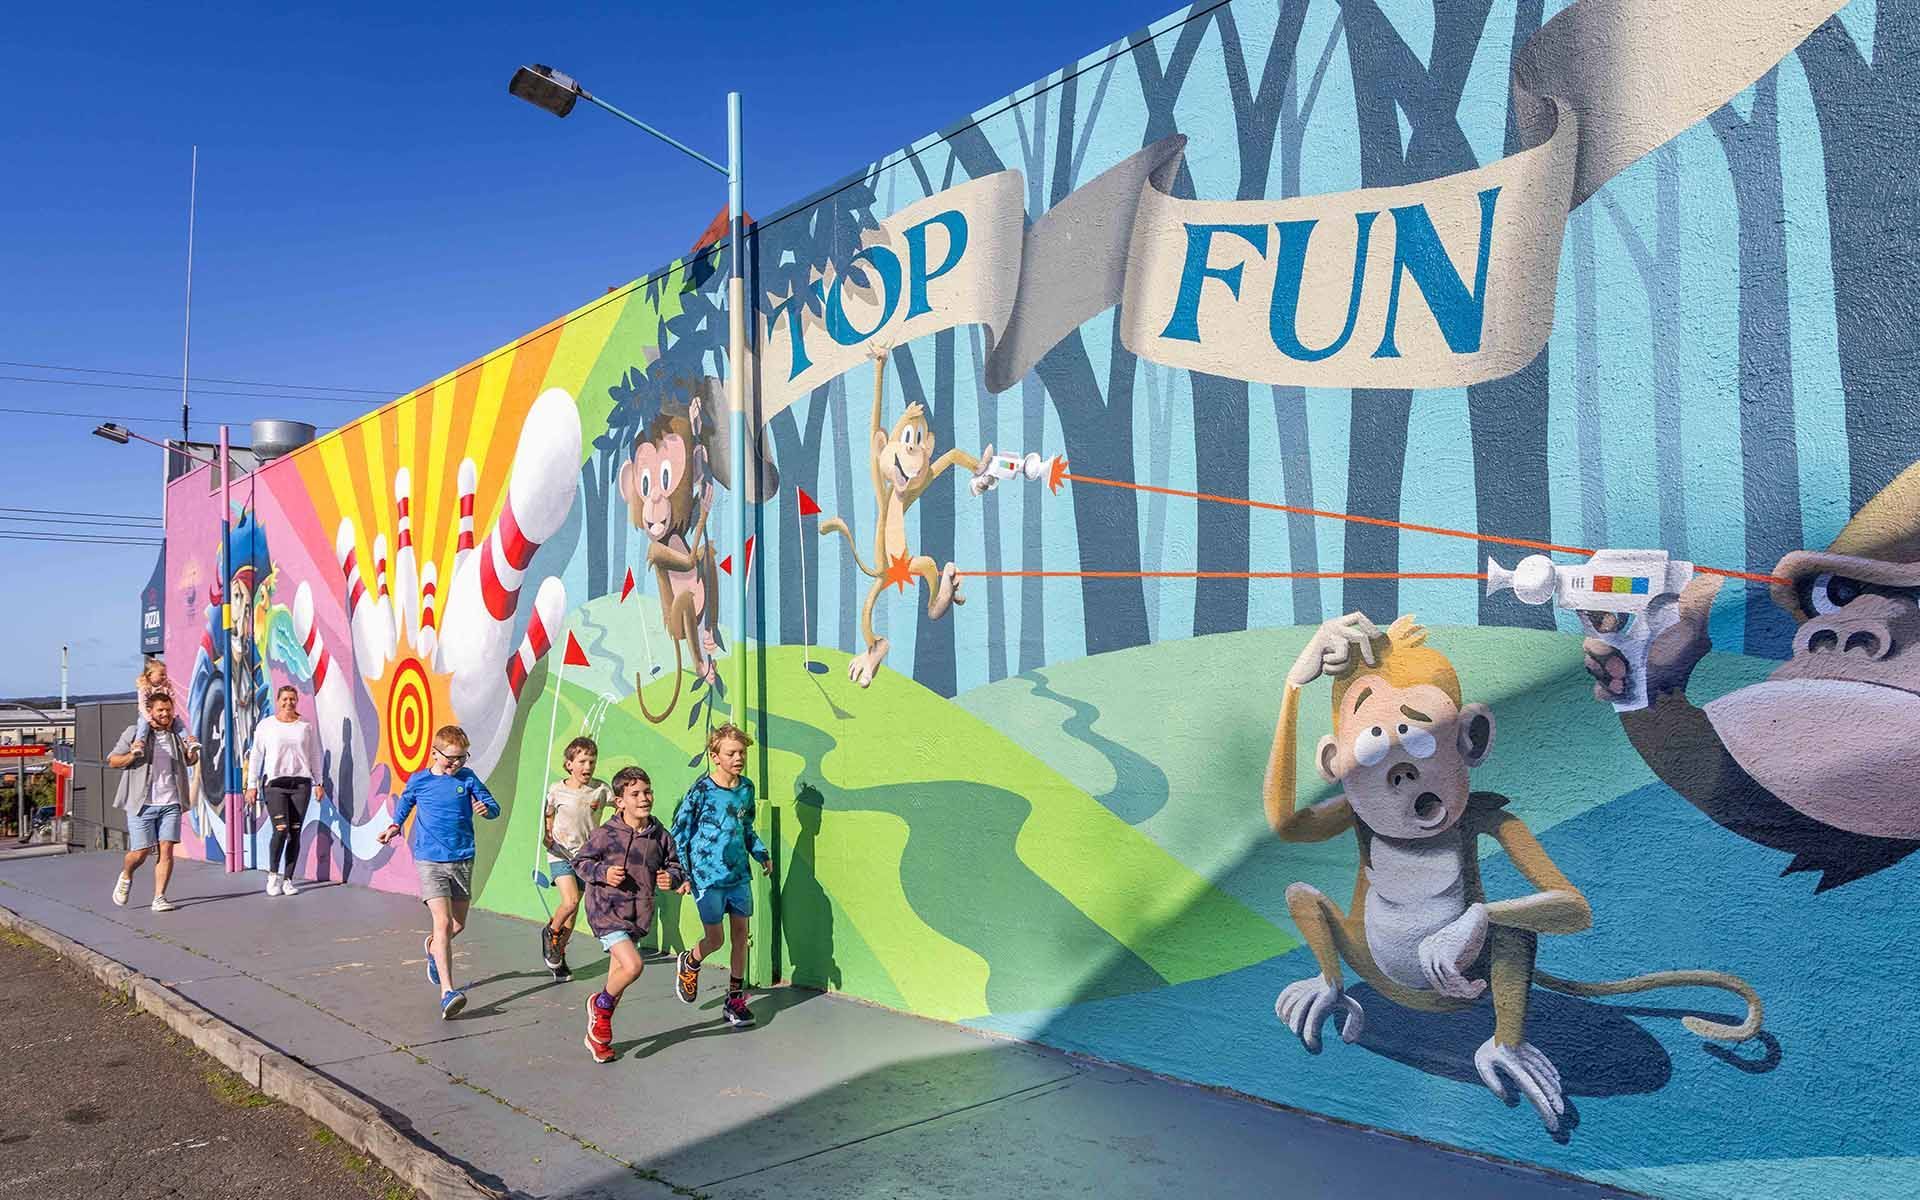 The Destination Agency, Sapphire Coast - Top Fun Merimbula  - Tourism Marketing Project